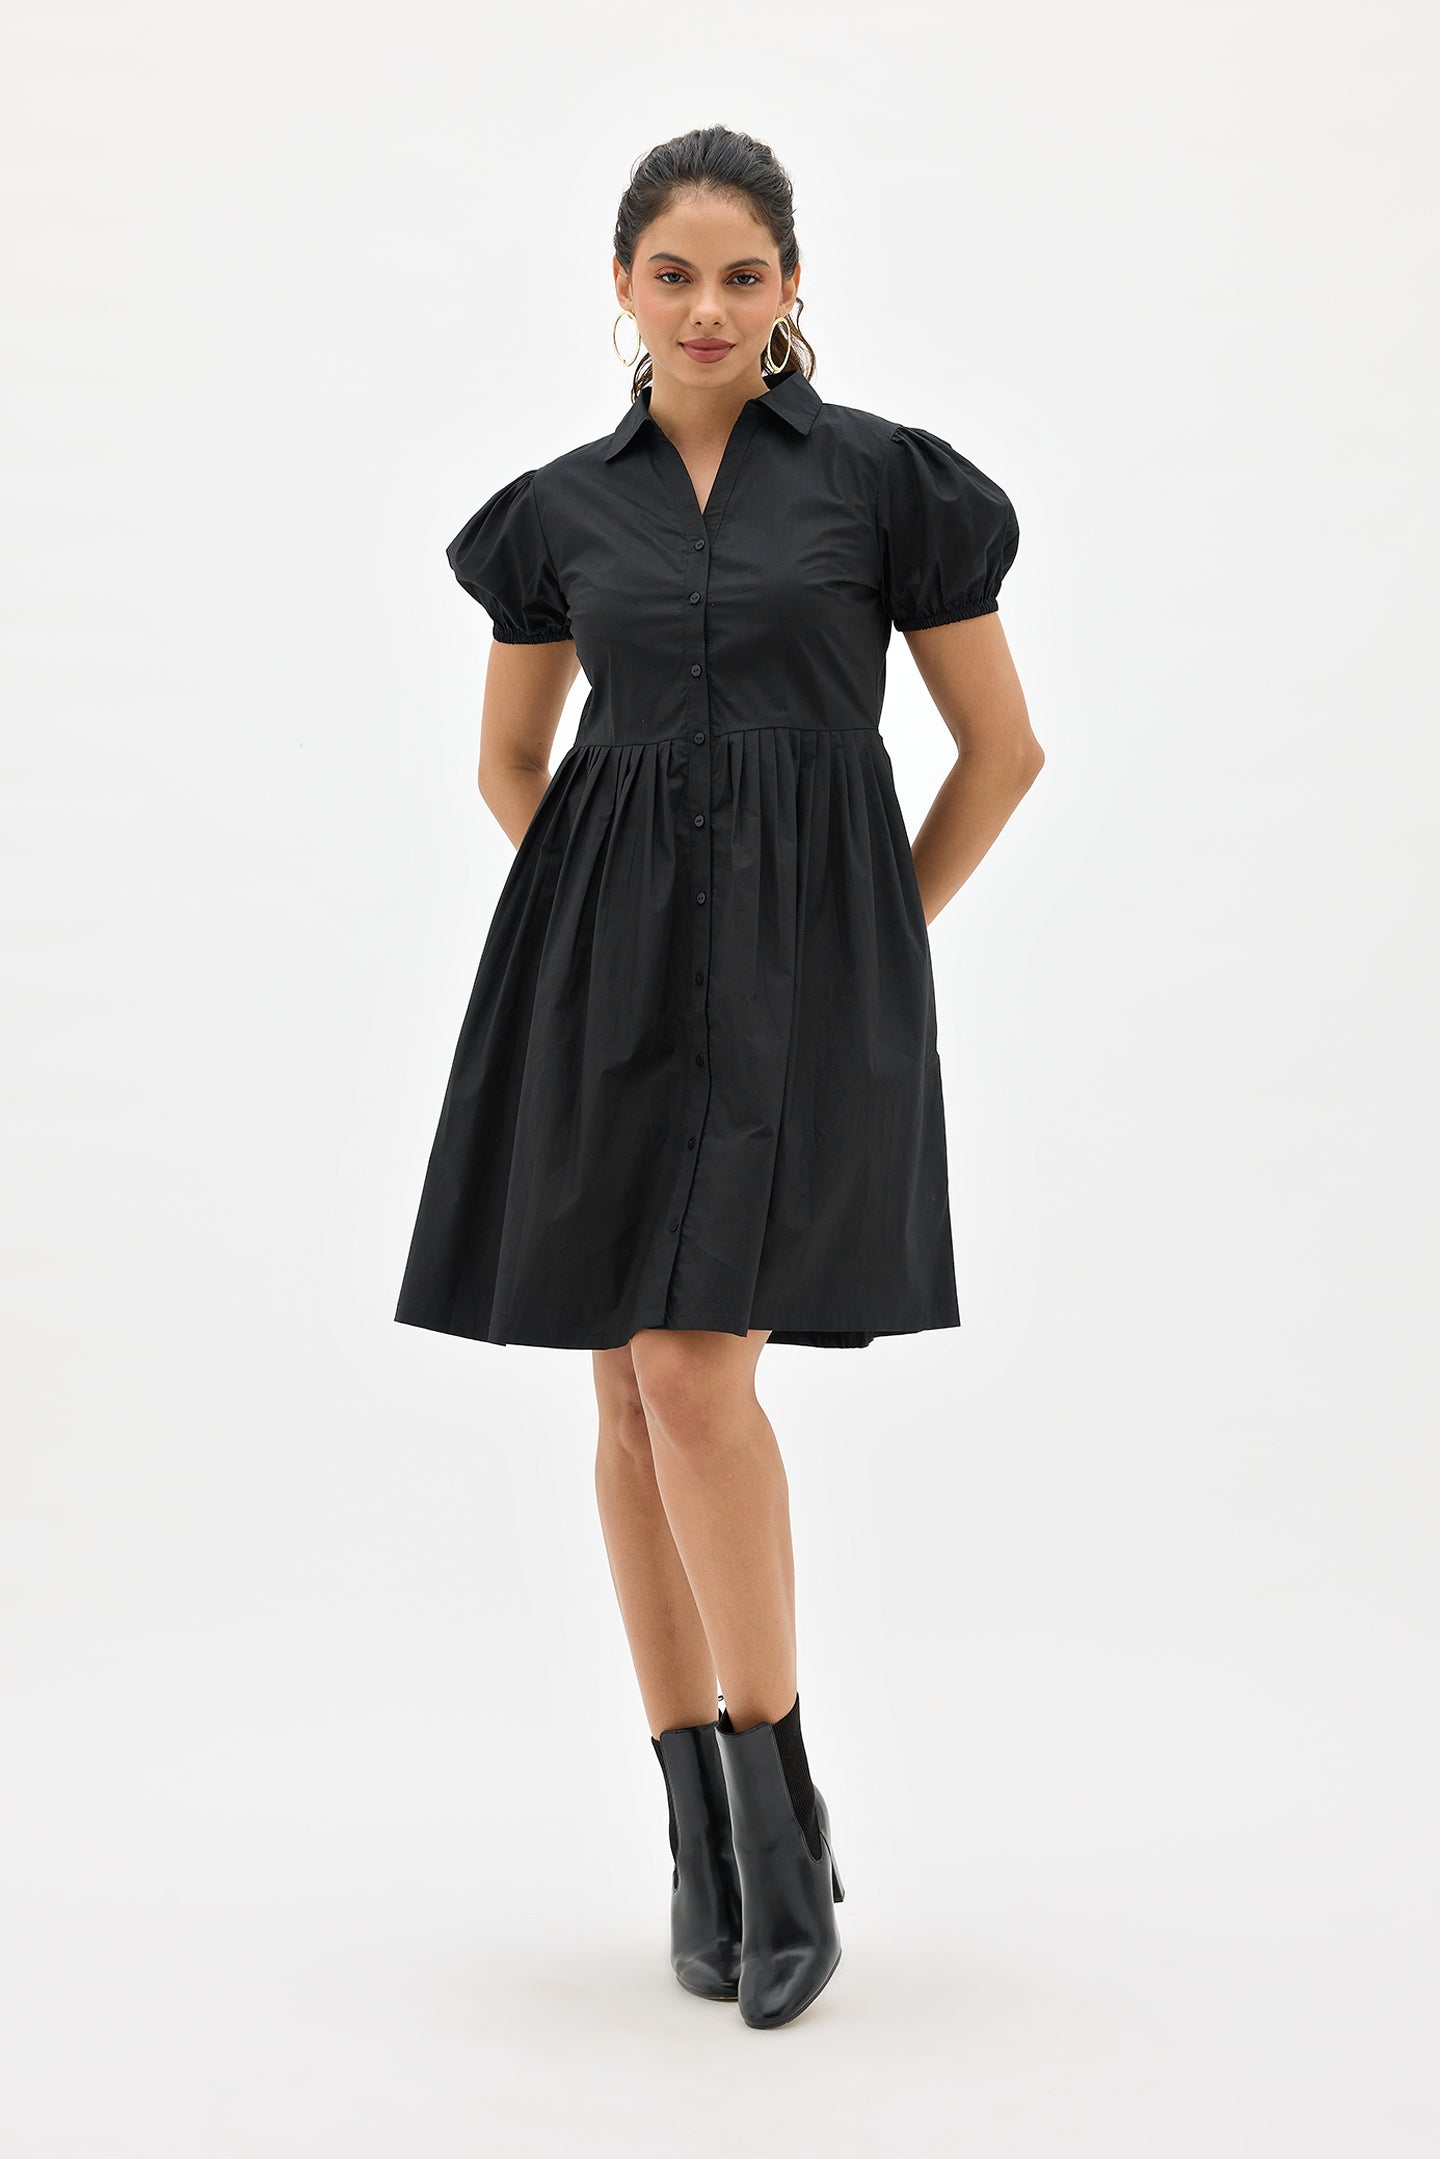 Ruth|Softest Cotton Shirt Dress with Pockets